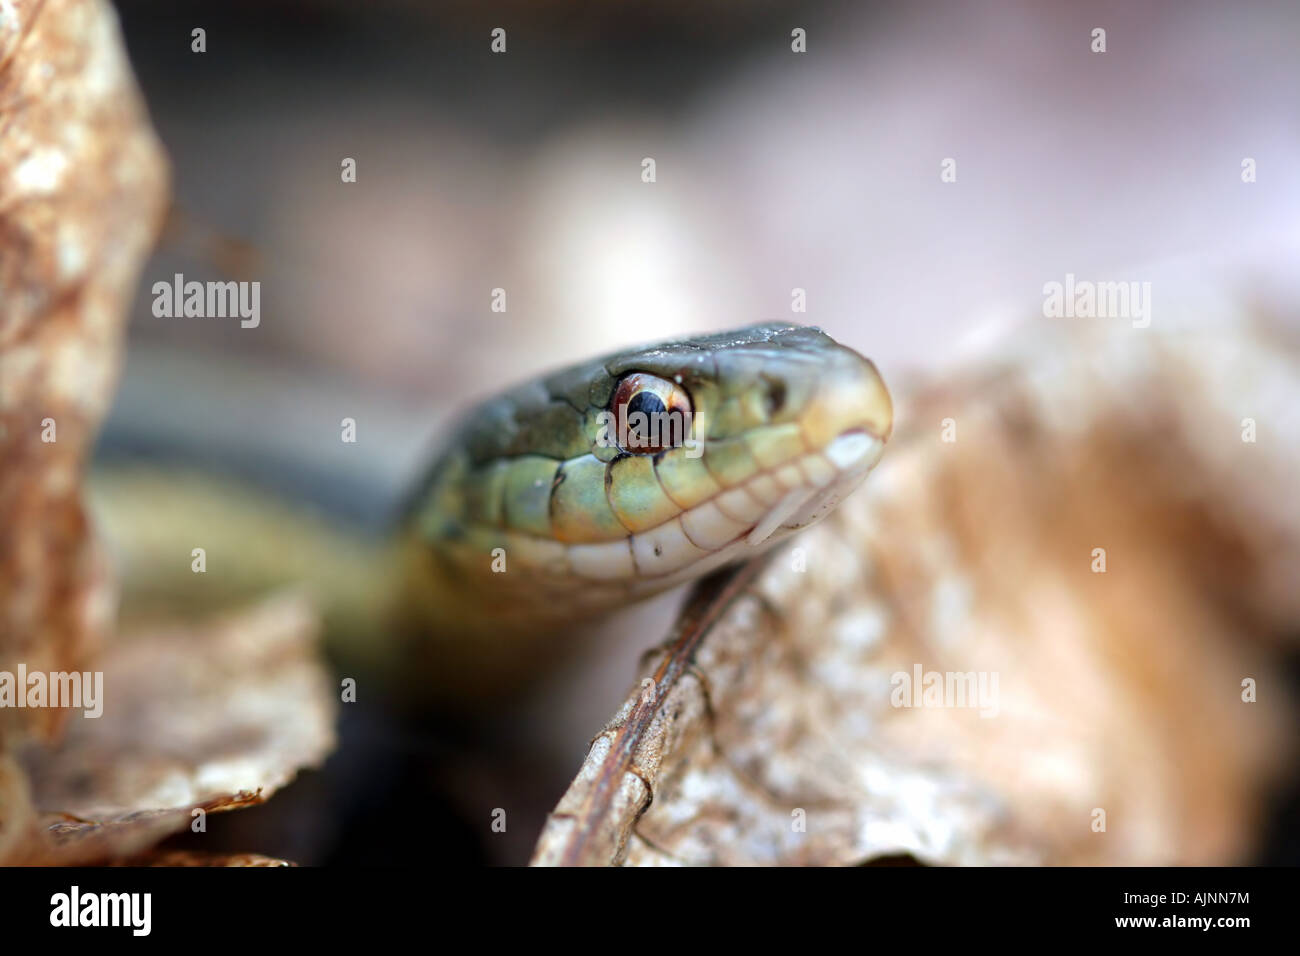 snake close up Stock Photo